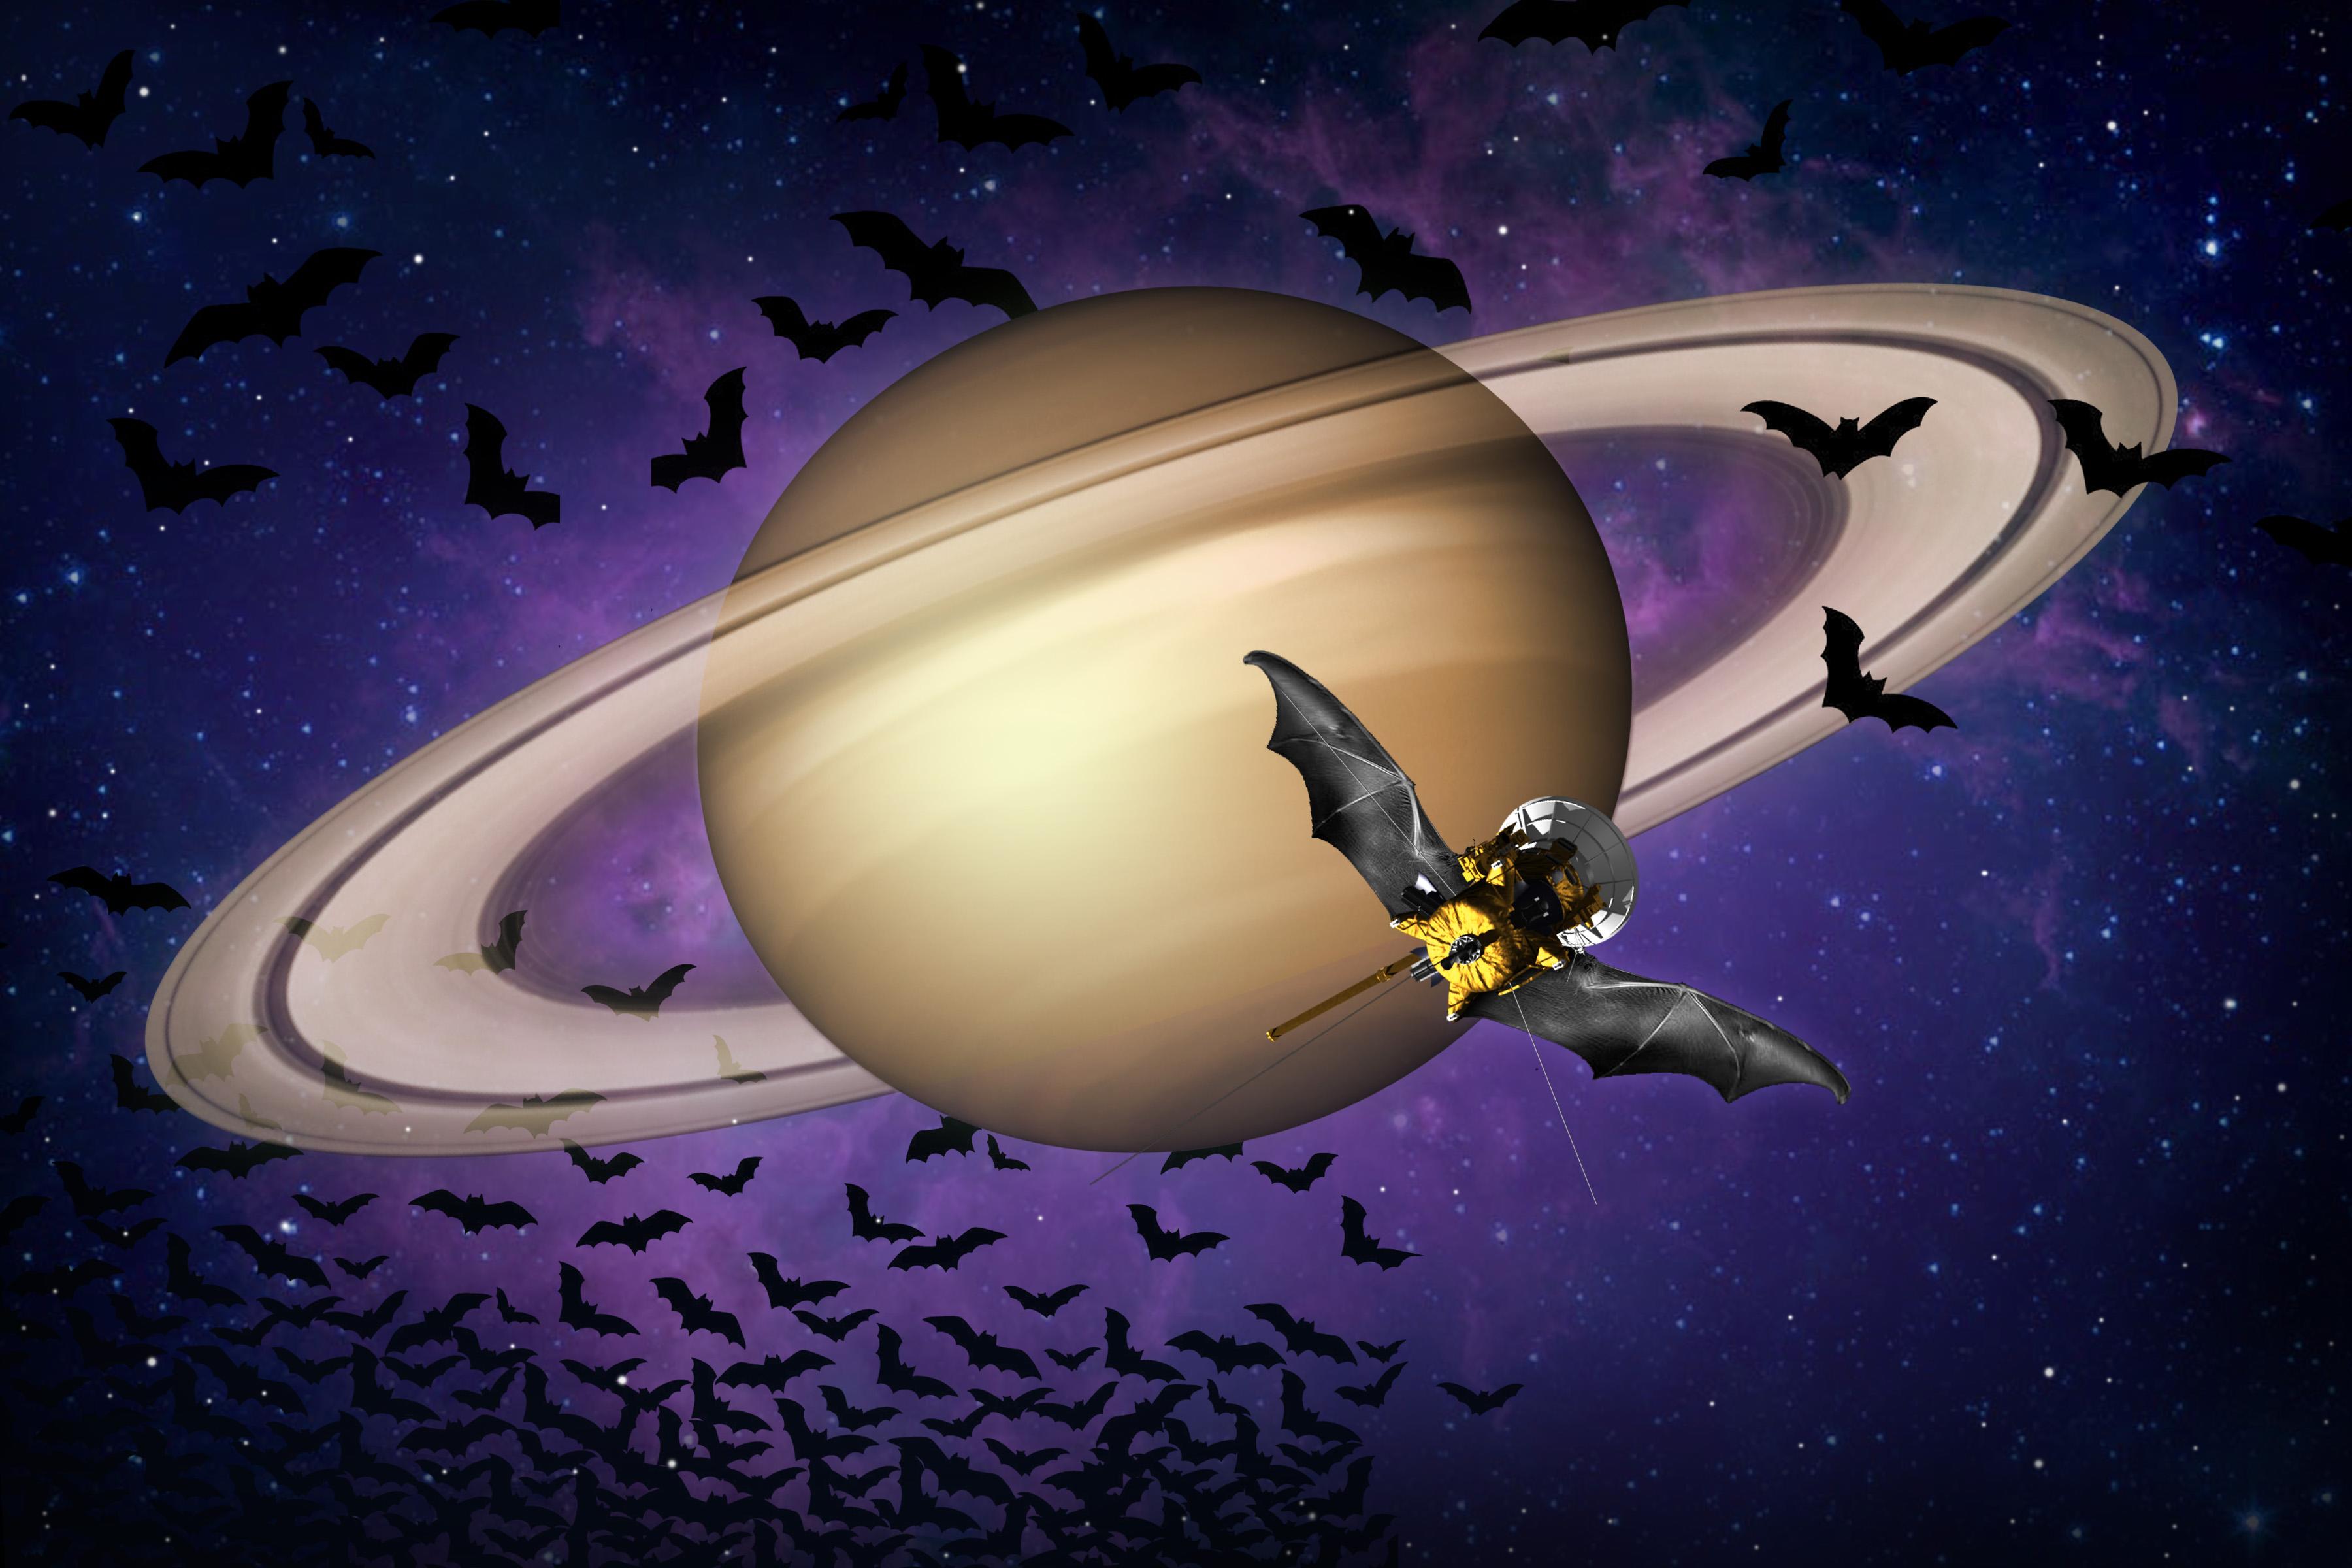 Cassini spacecraft illustrated with bat wings.